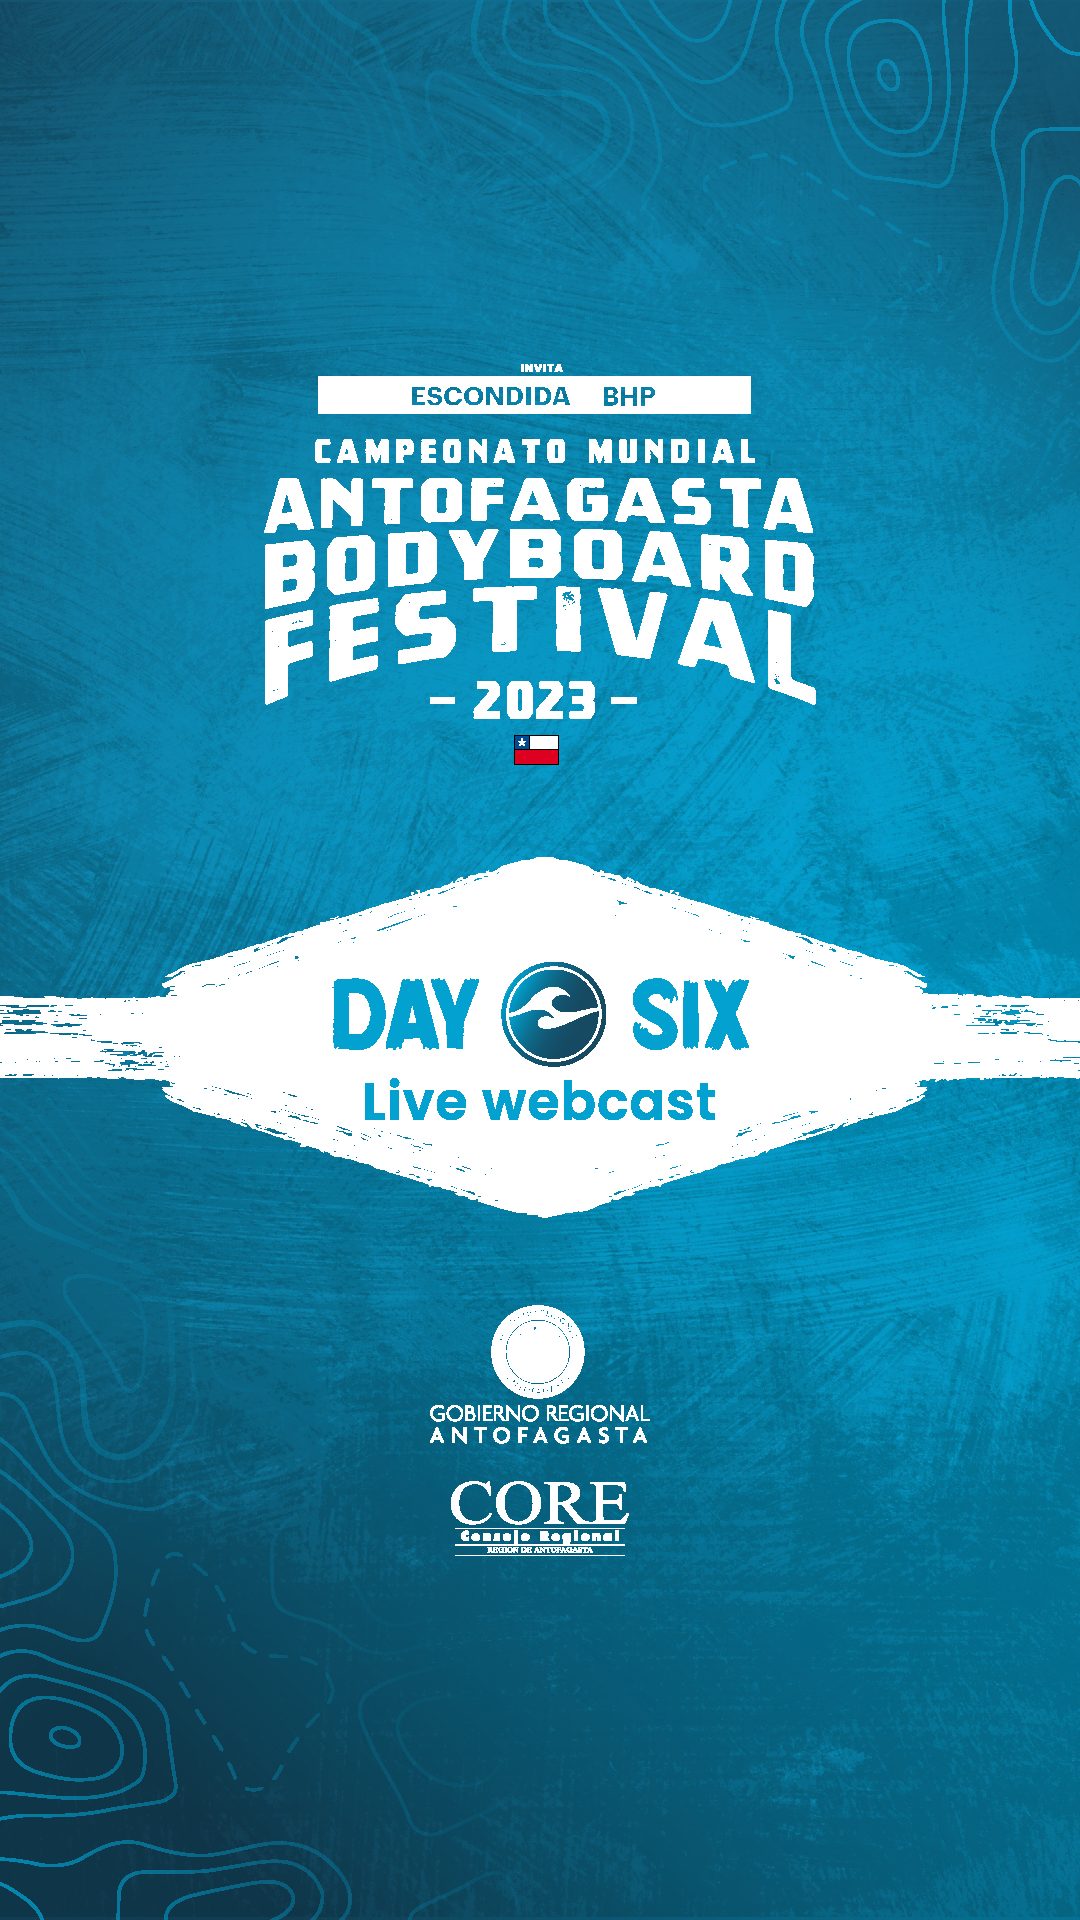 Antofagasta Bodyboard Festival 2023 IBC Live Stream Day 6 IBC World